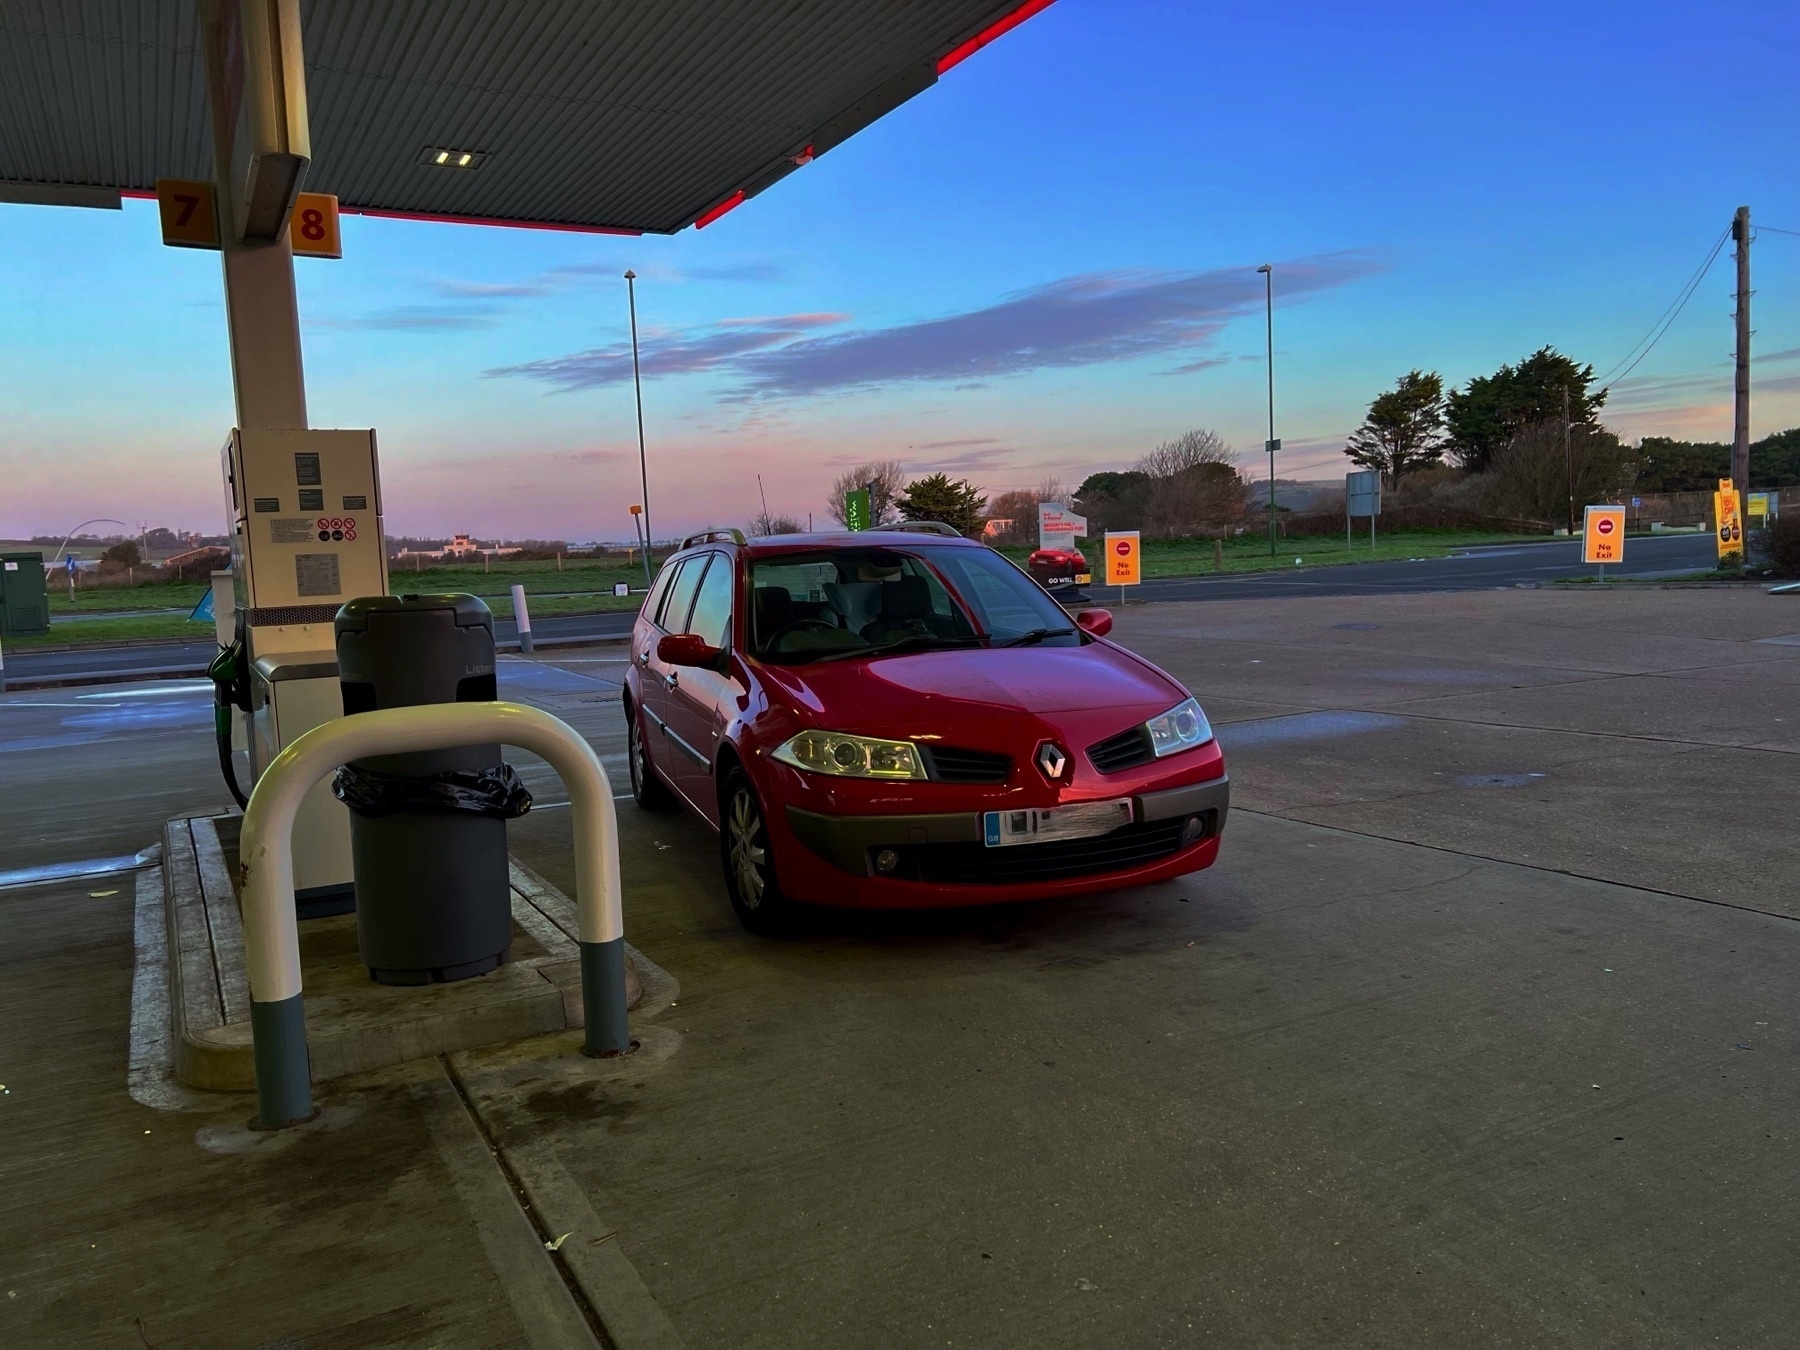 A Renault Megane at a petrol station. 